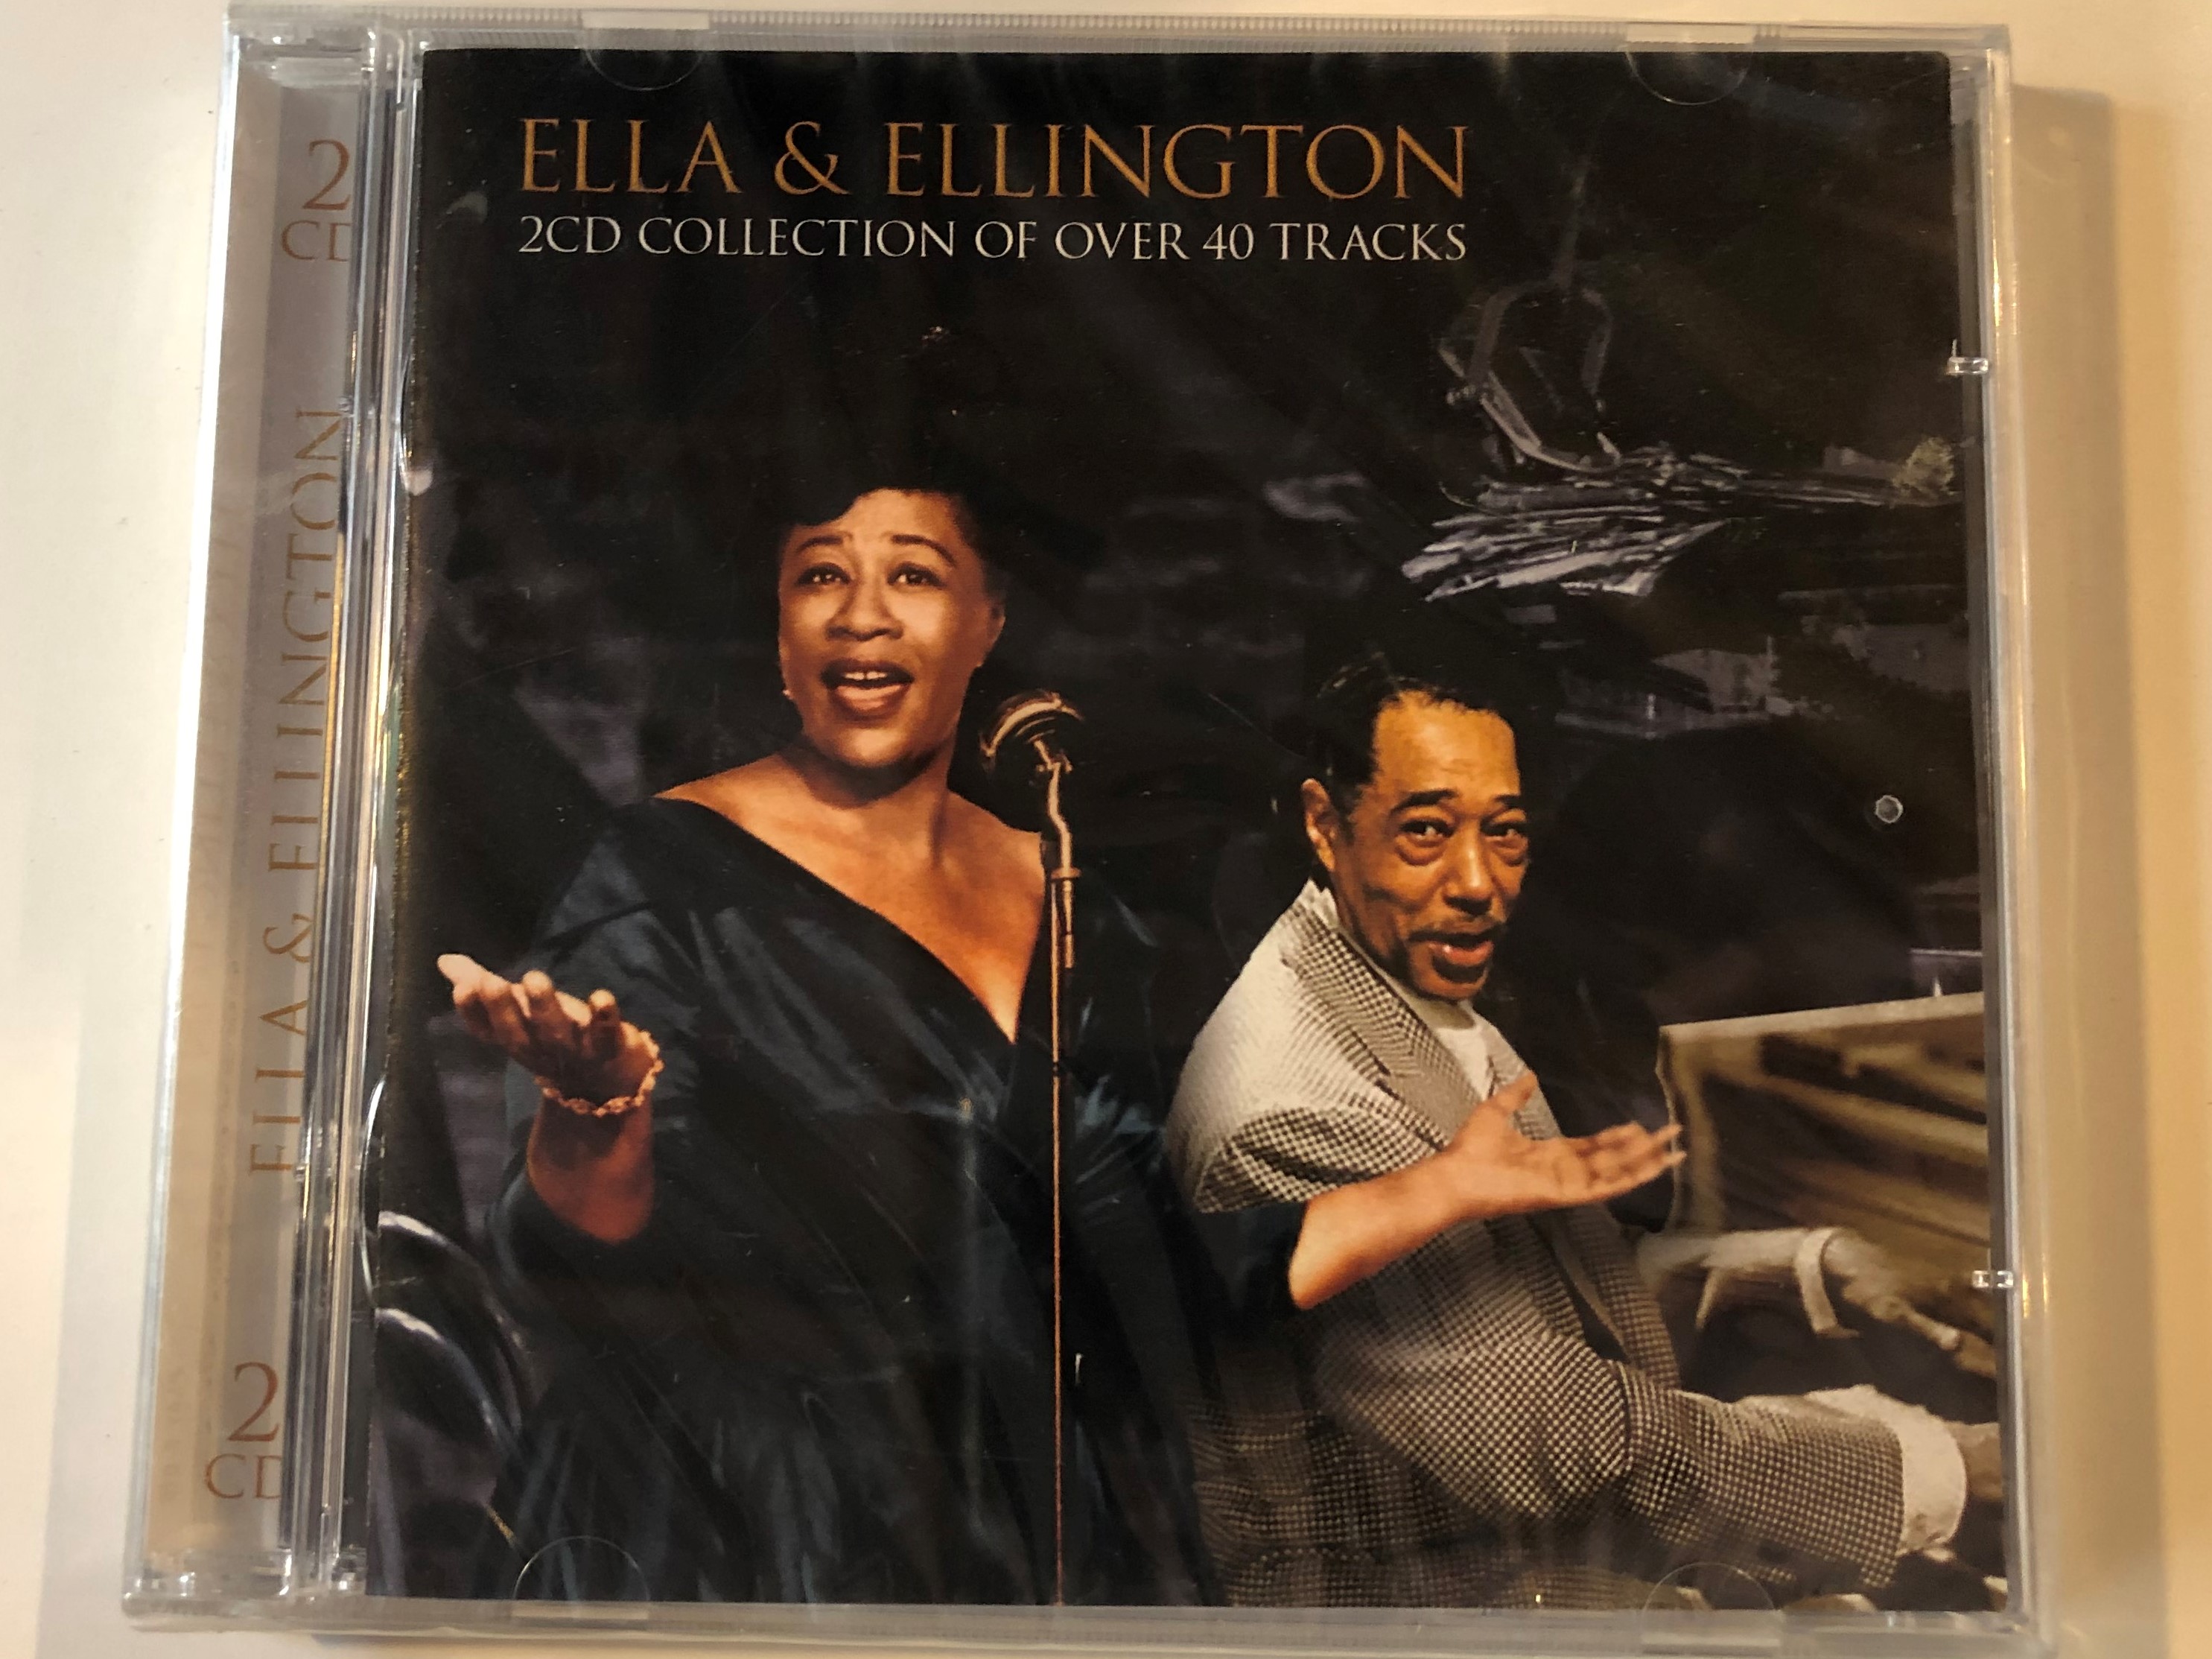 ella-ellington-2cd-collection-of-over-40-tracks-play-24-7-2x-audio-cd-2007-5051503201628-1-.jpg